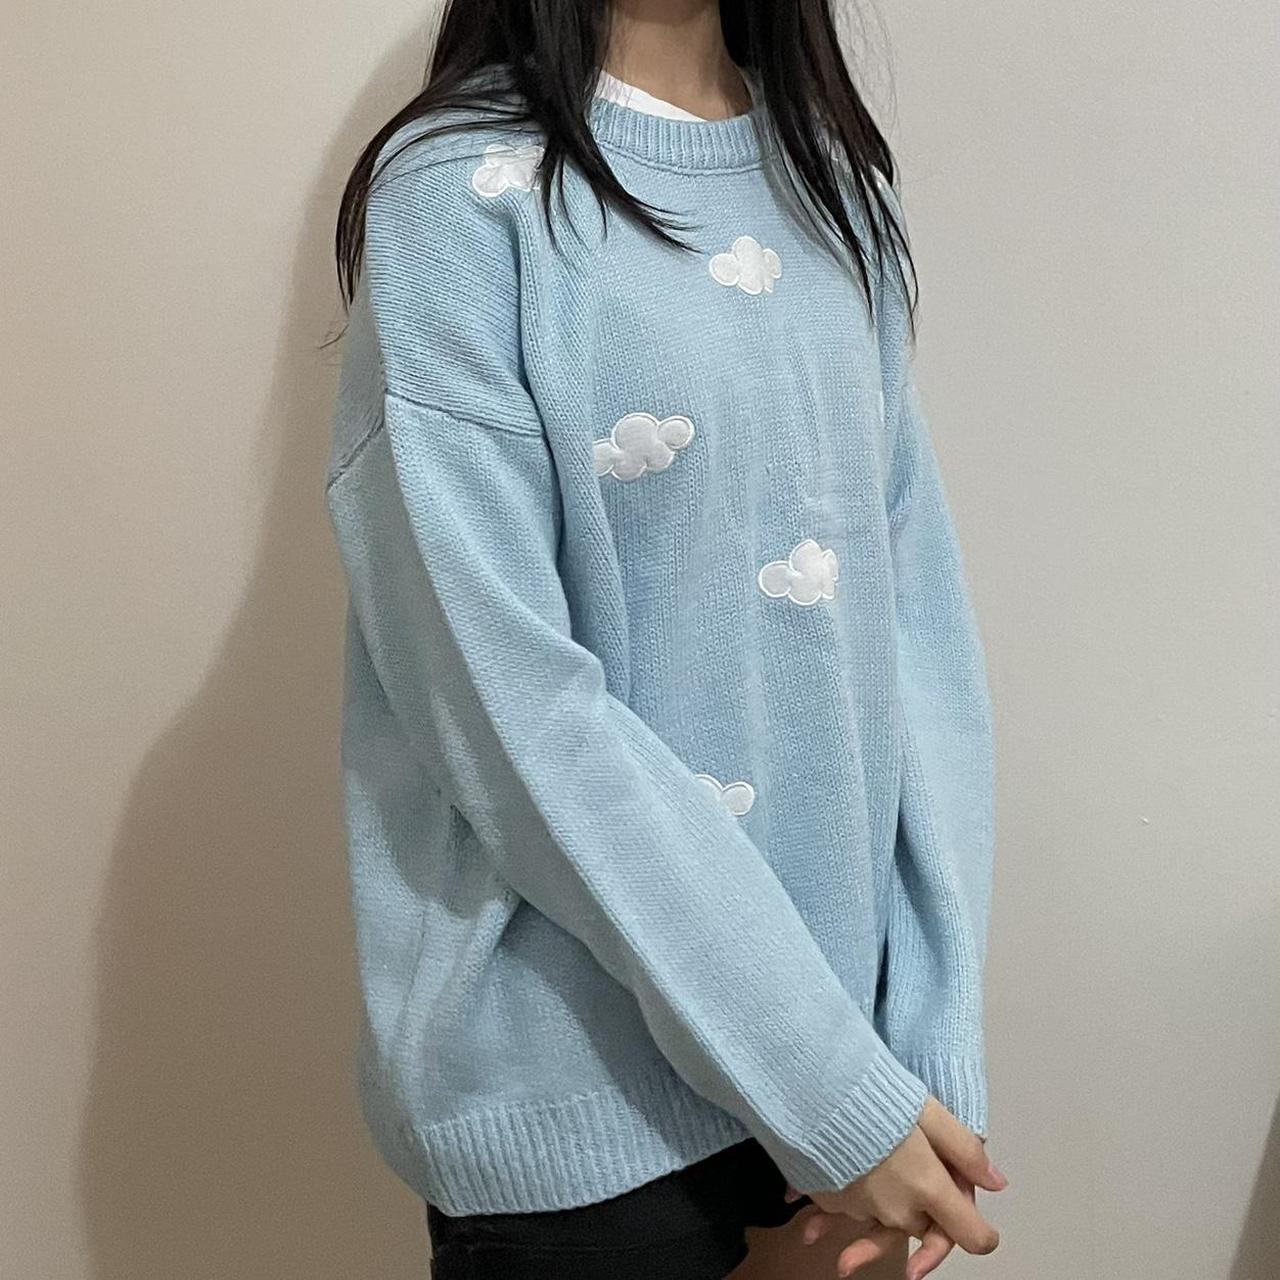 Oversize blue cloud sweater -cute cloud pattern - Depop